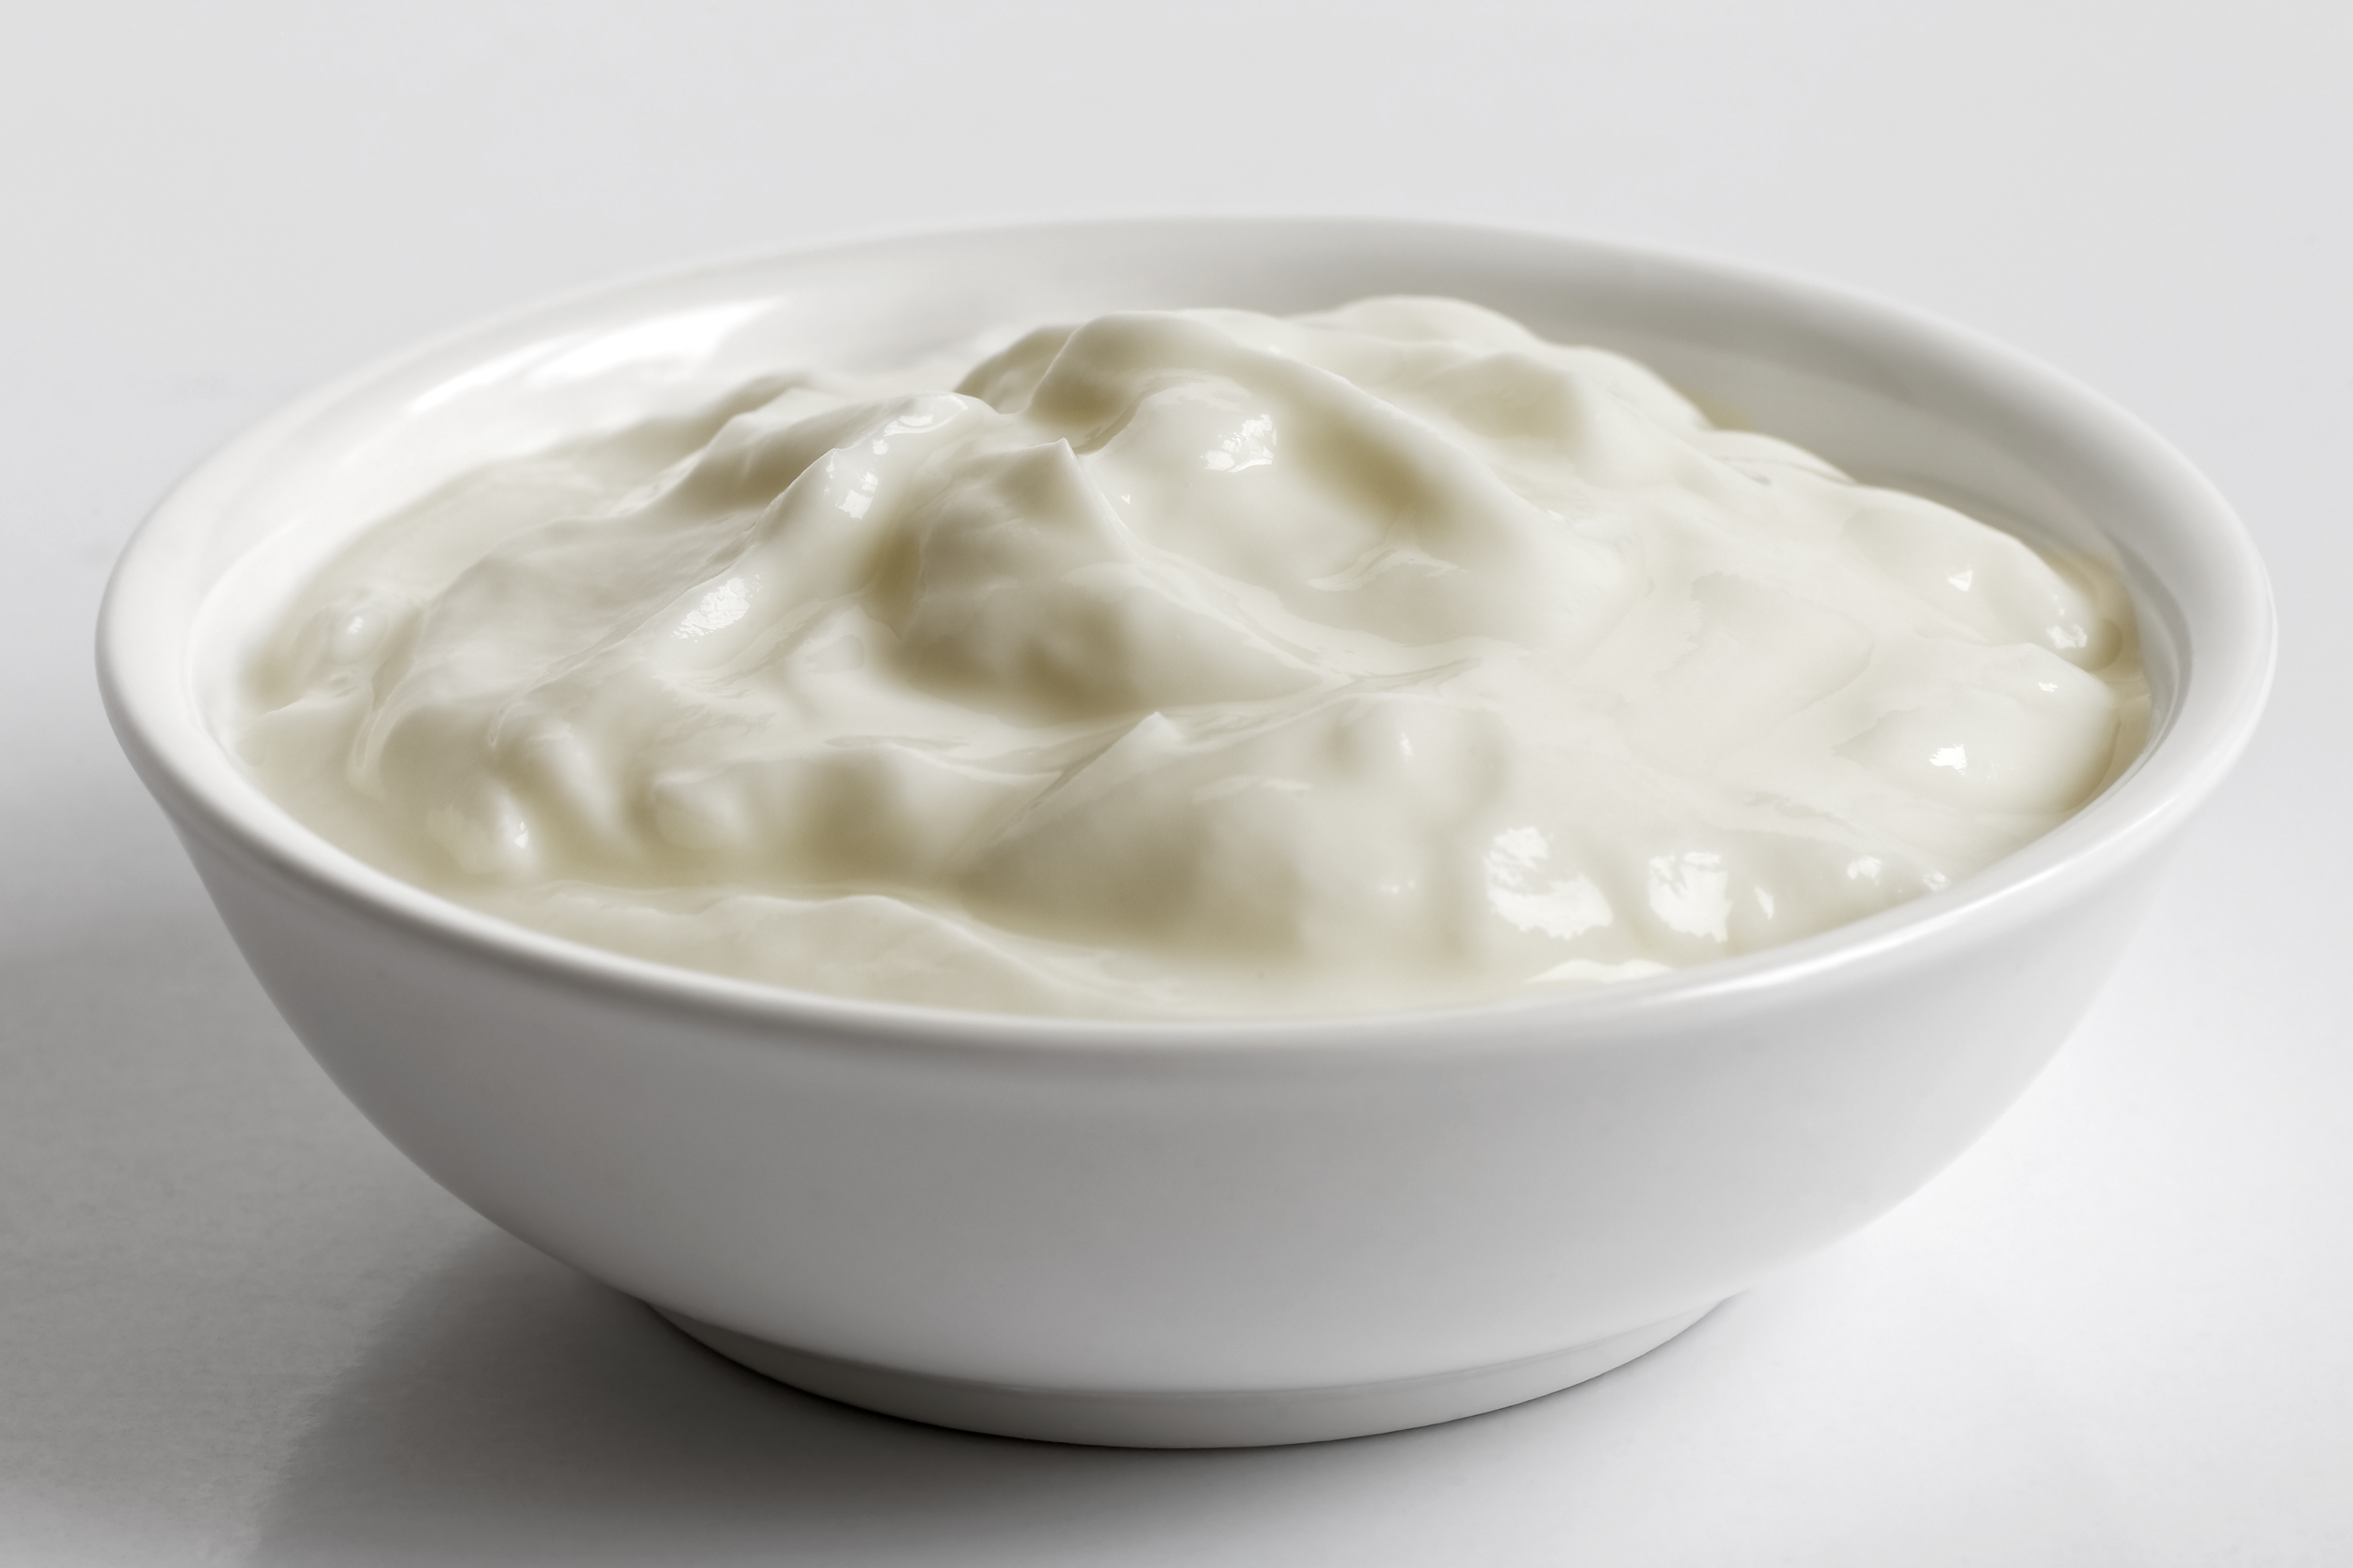 White ceramic bowl of skyr yoghurt isolated on grey background.